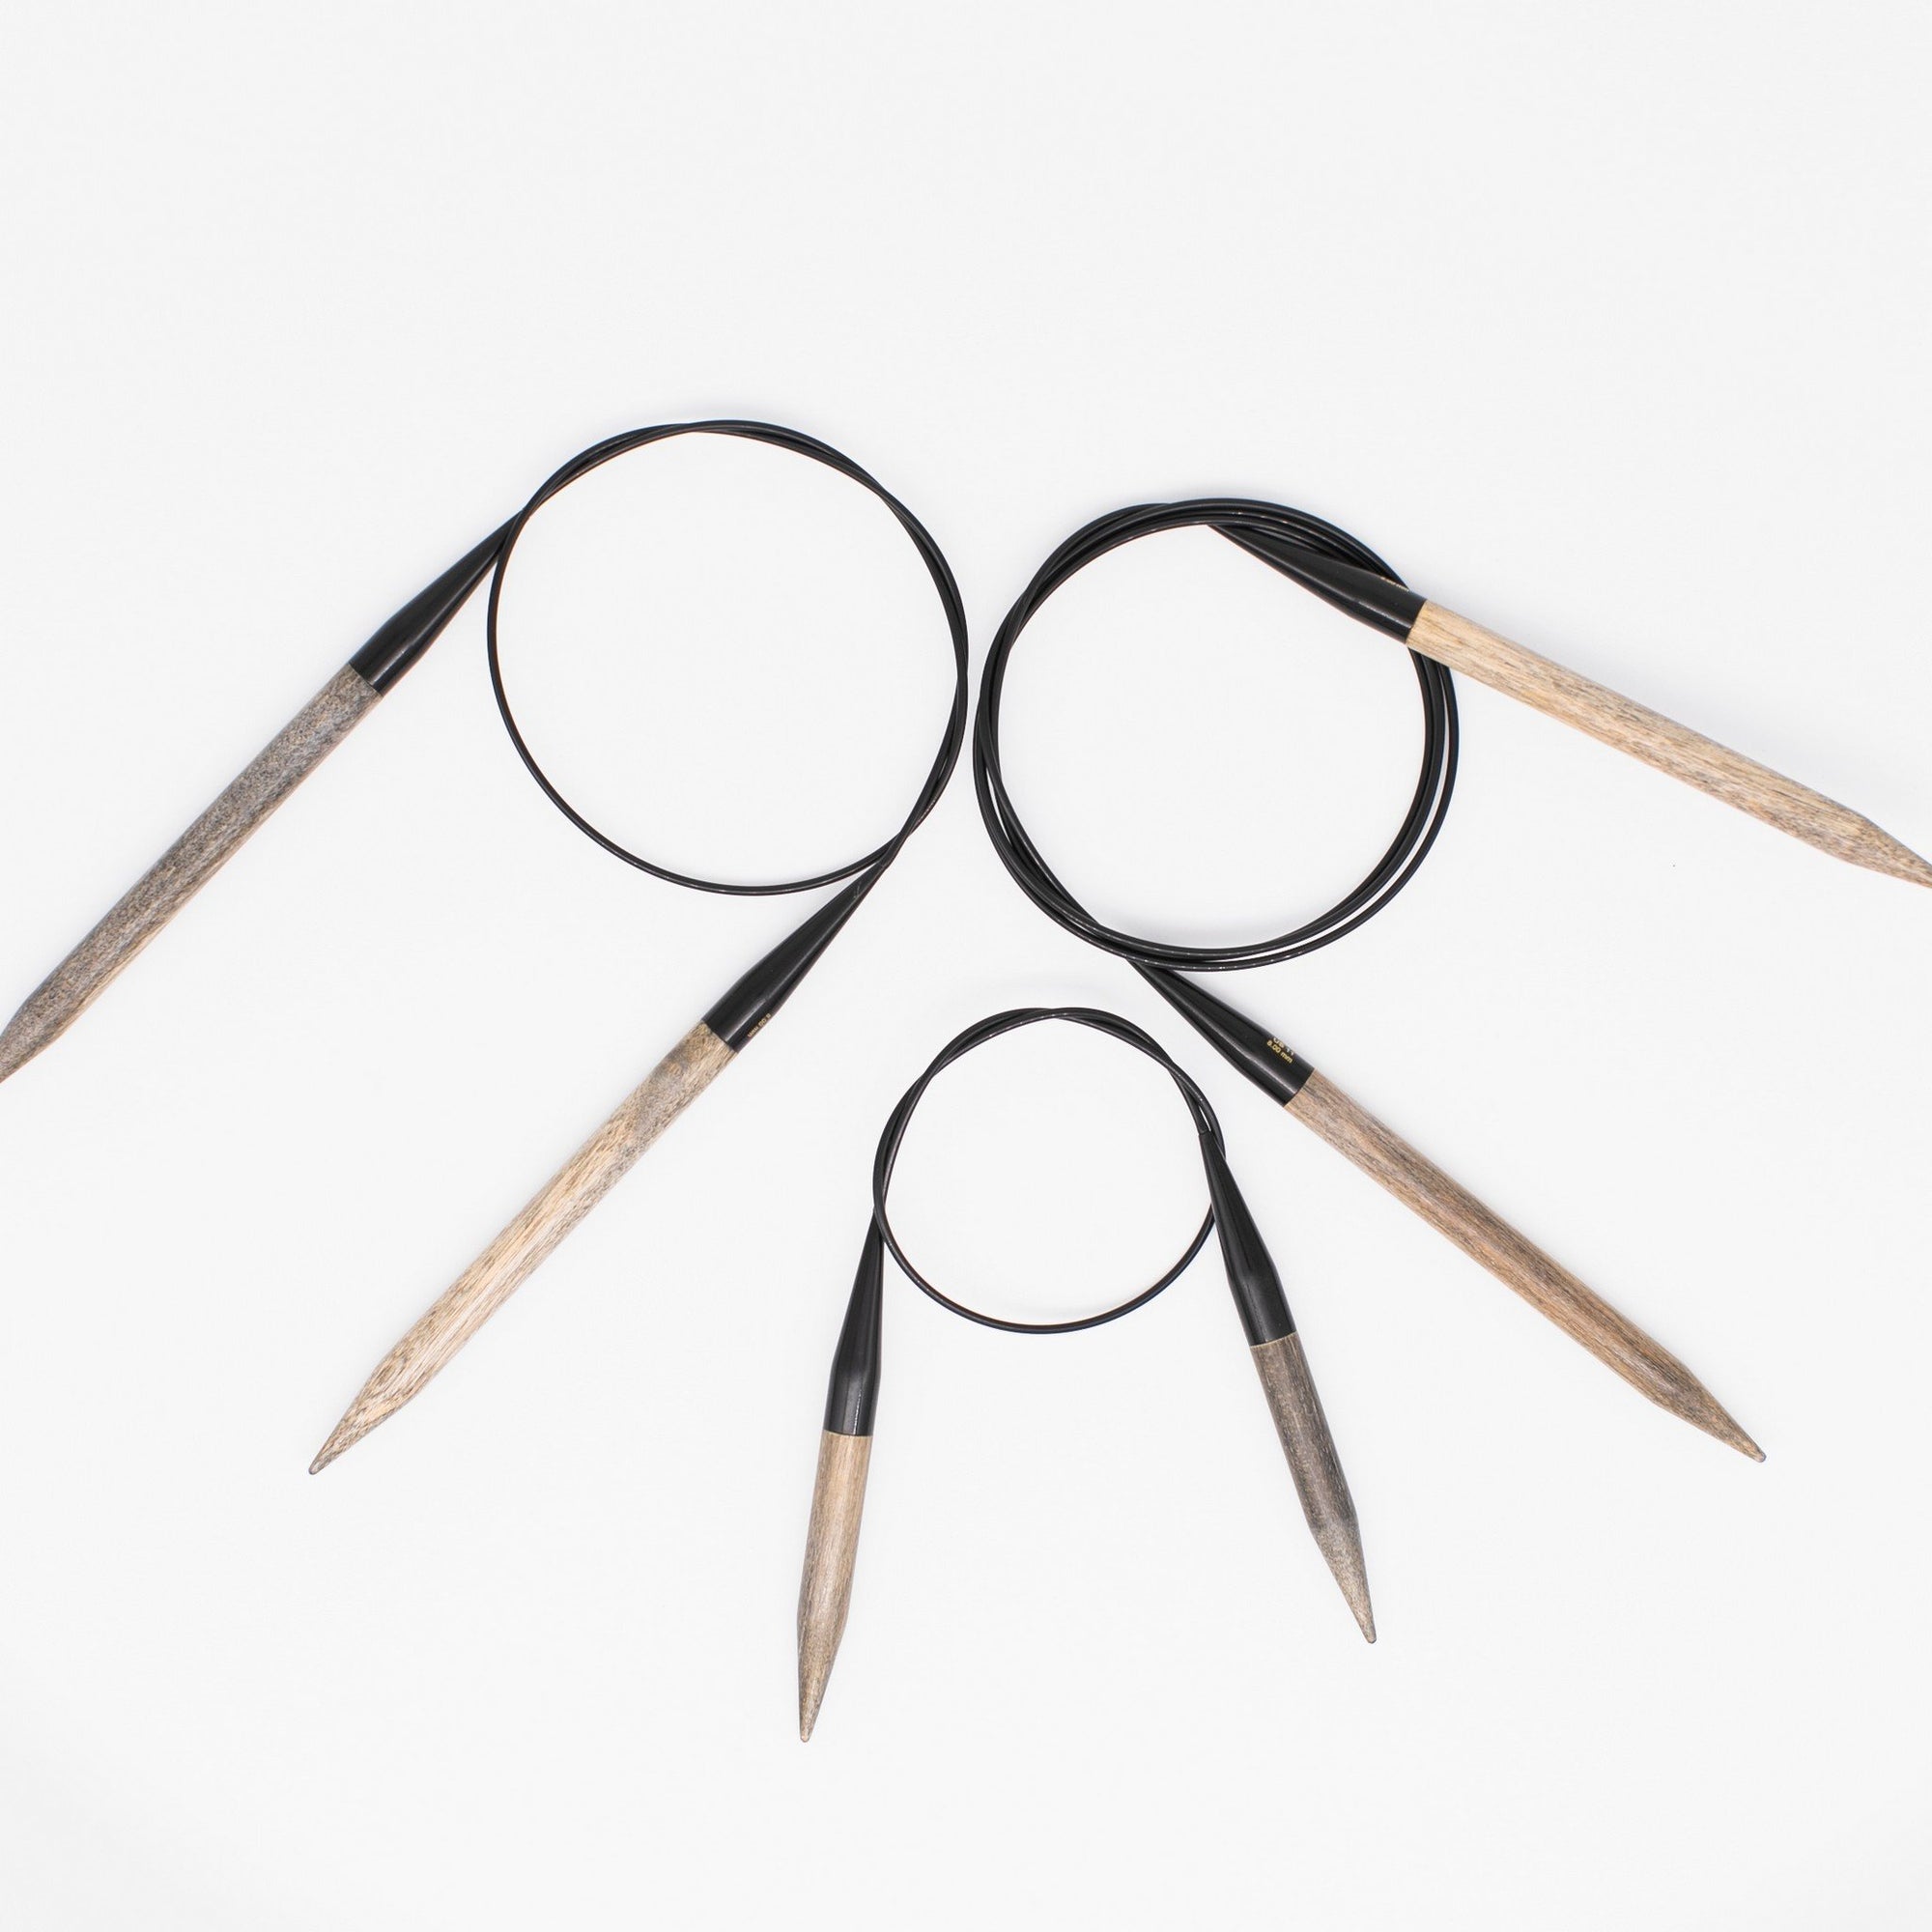 LYKKE Driftwood Fixed Circular Knitting Needles – Quixotic Fibers